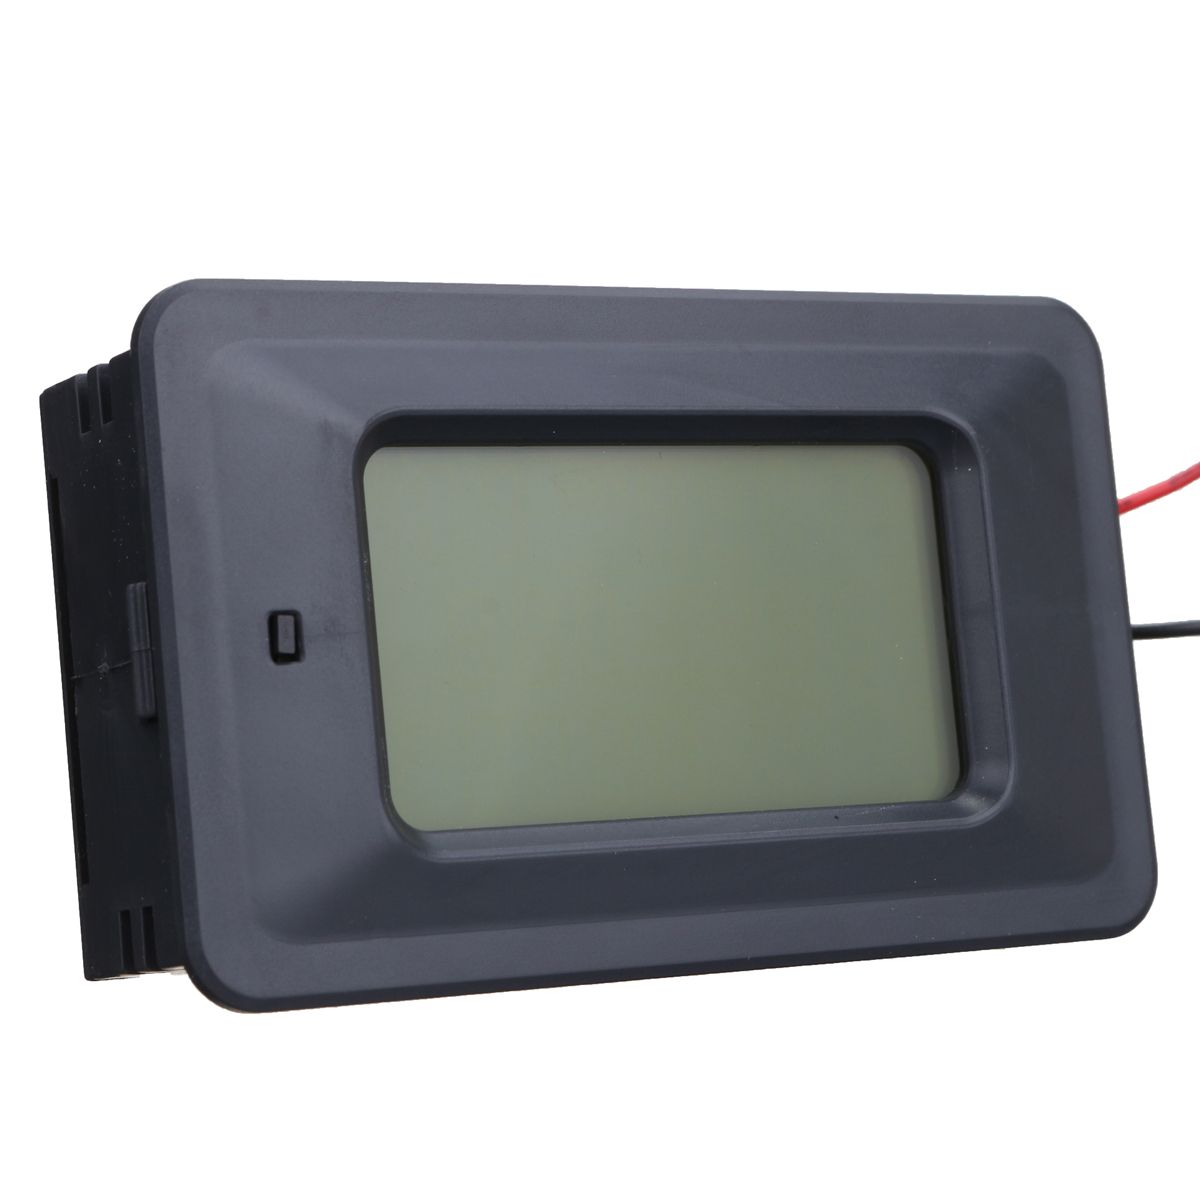 100A-AC-Digital-LED-Power-Panel-Meter-Monitor-Power-Energy-Voltmeter-Ammeter-1205593